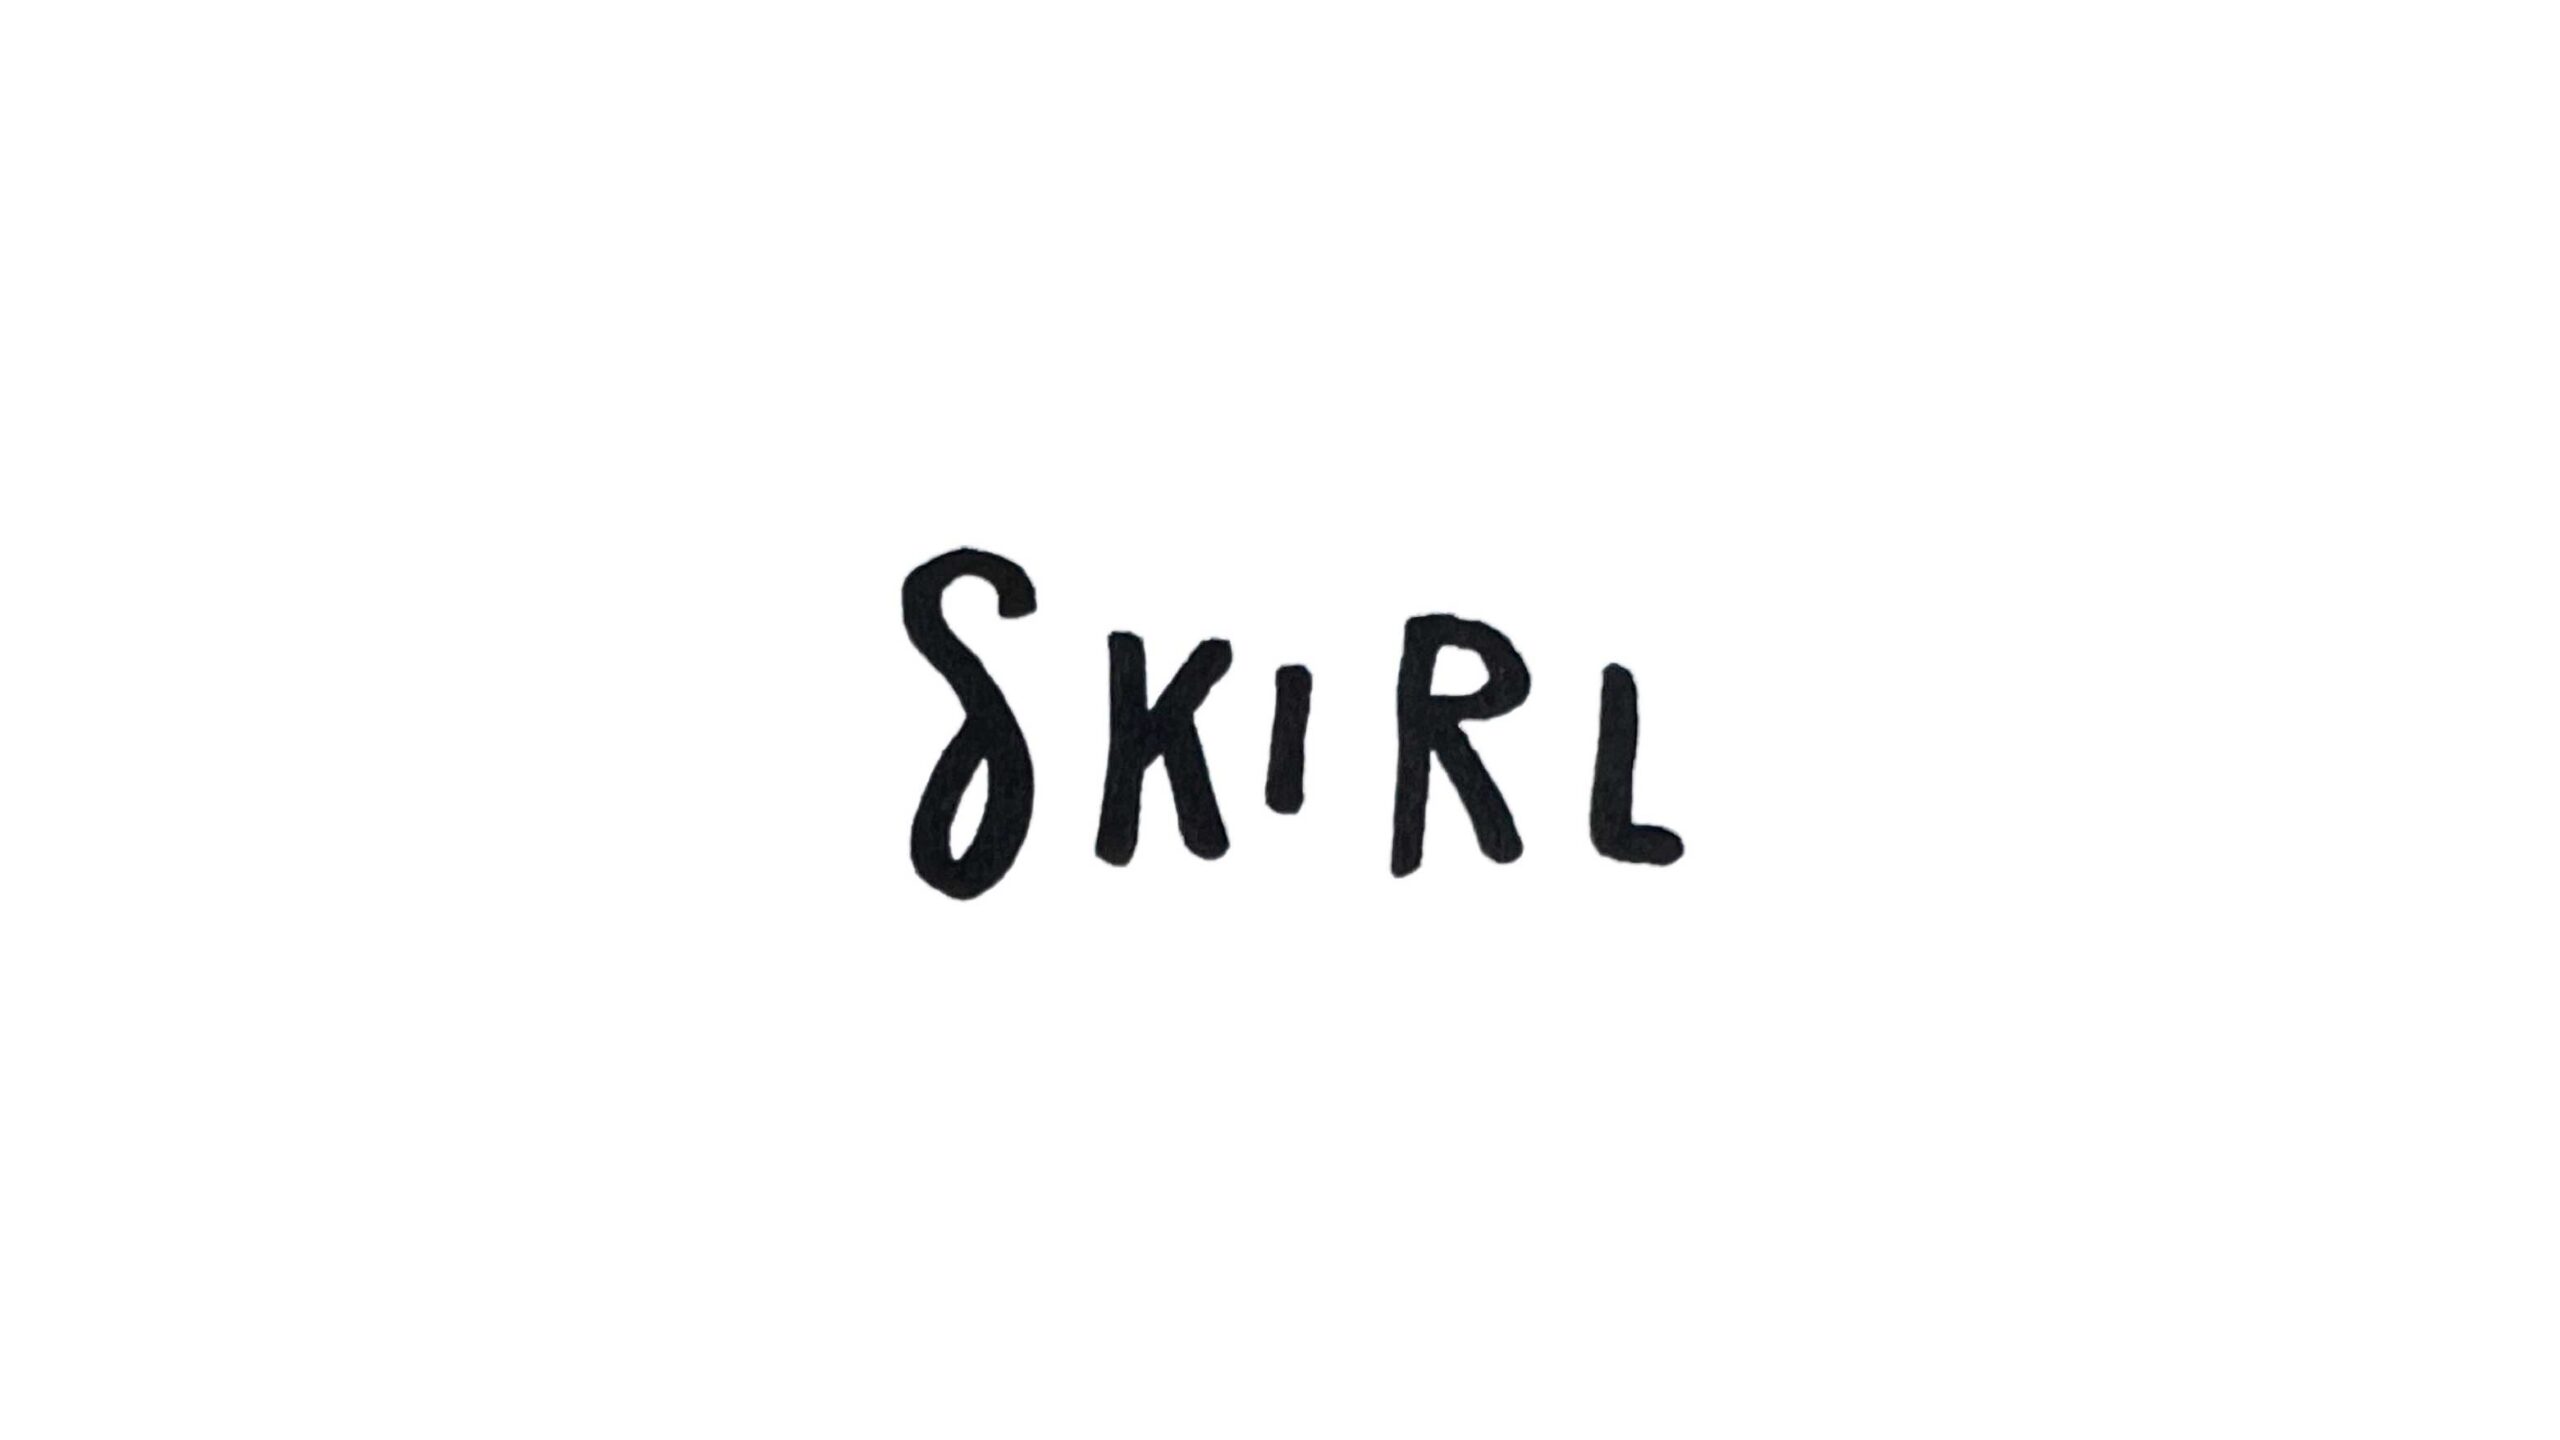 Graffiti writer SKIRL tag